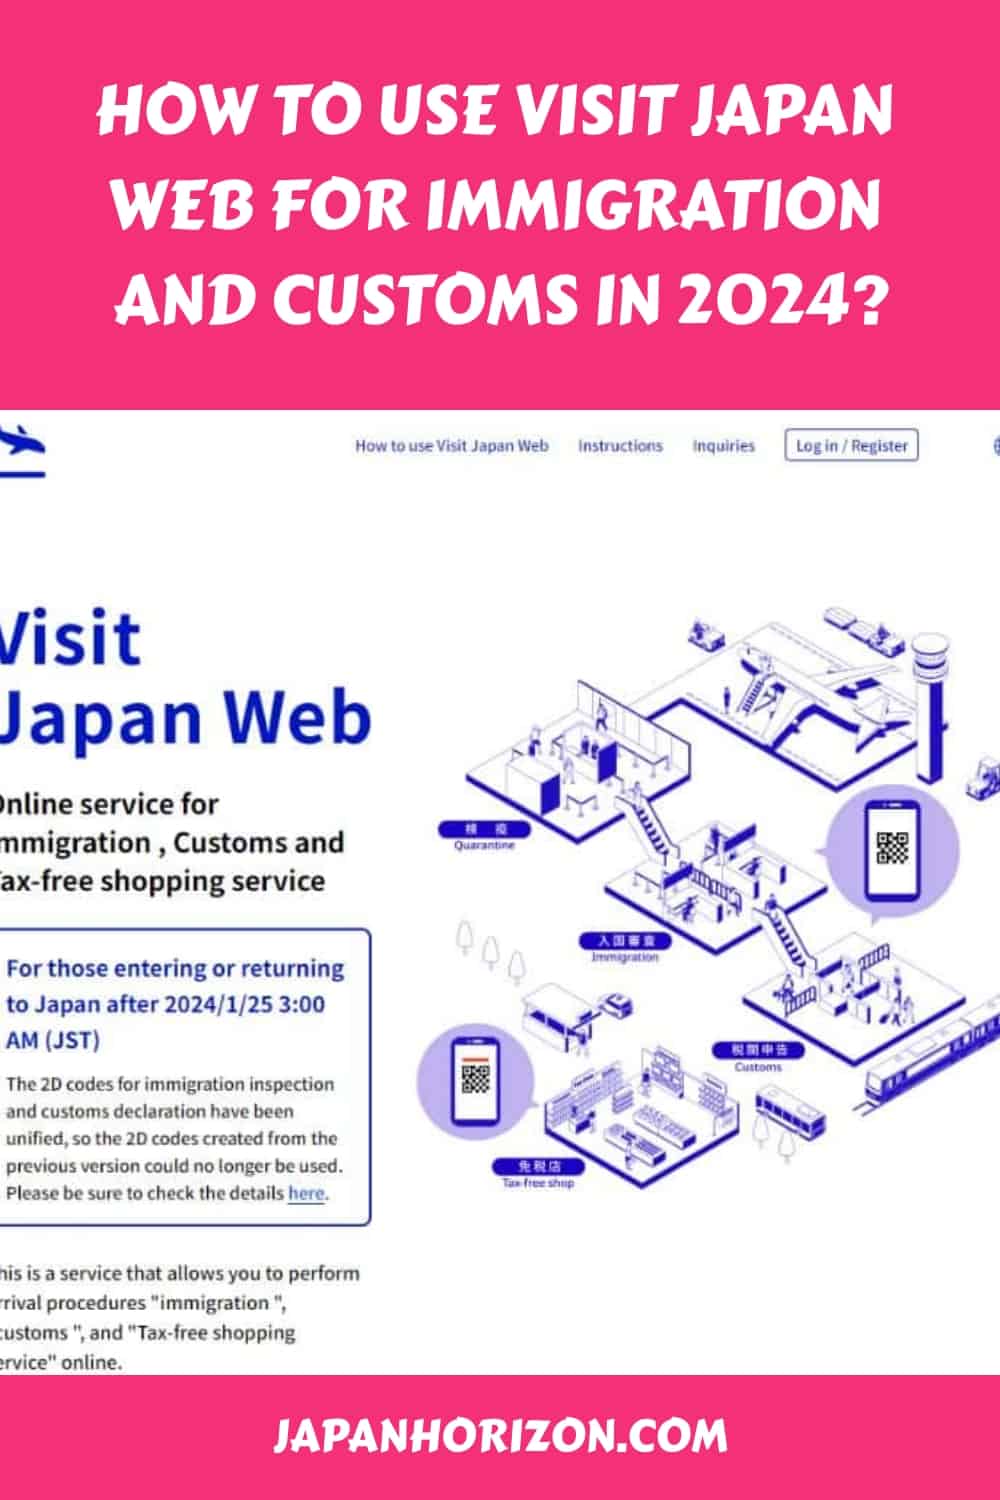 visit japan web multiple addresses